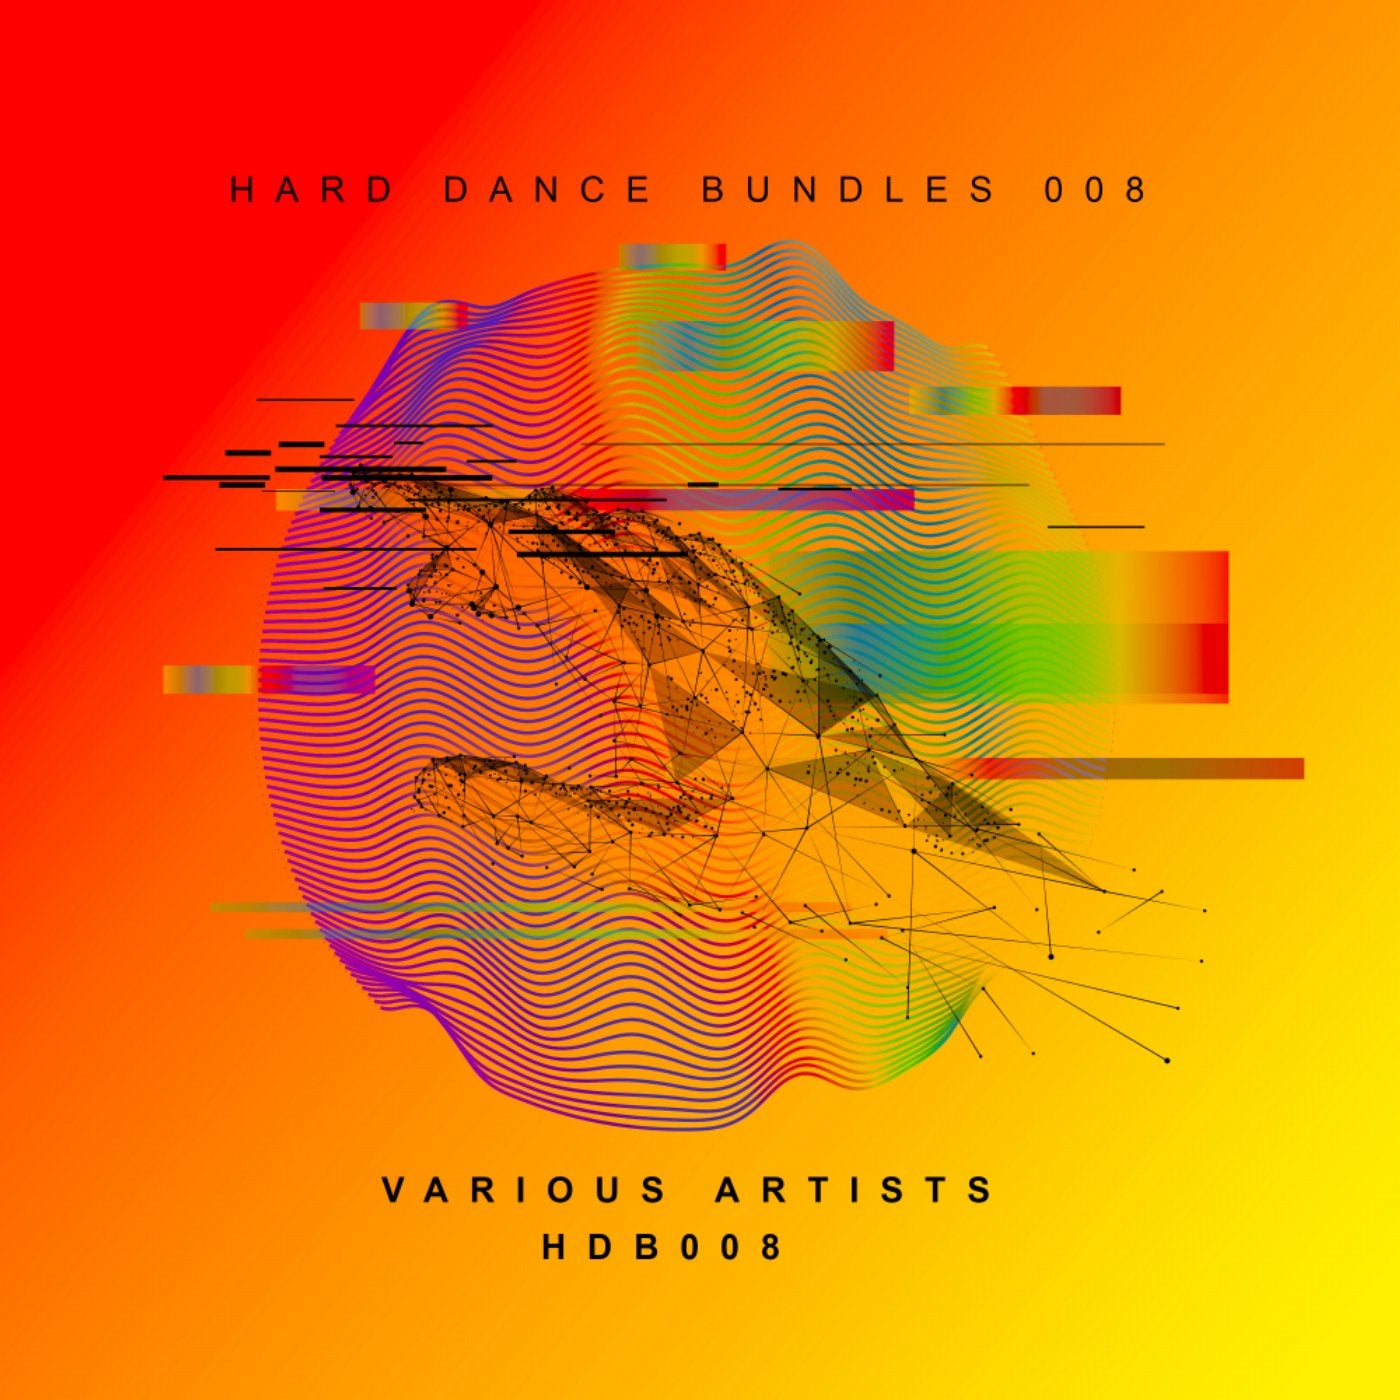 Hard Dance Bundles 008